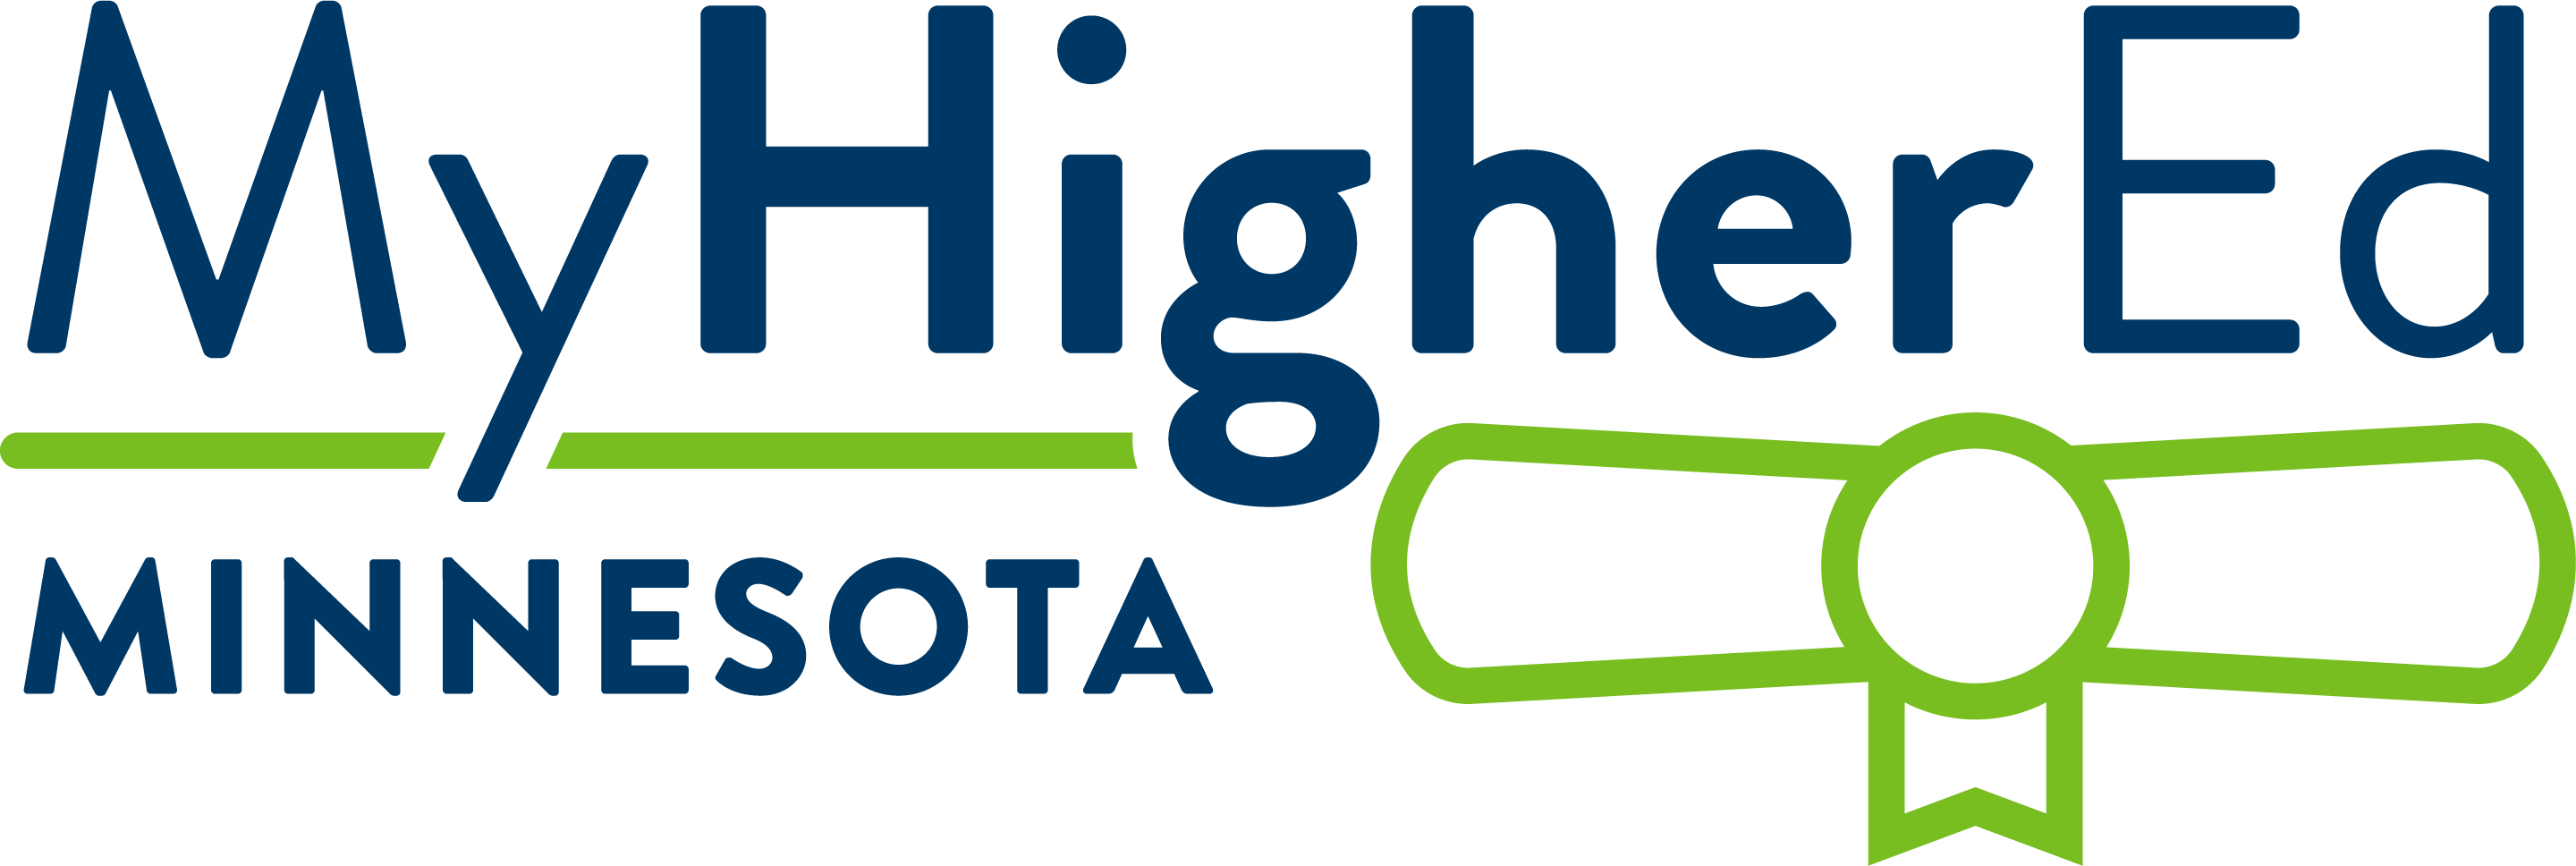 Minnesota Office of Higher Education logo